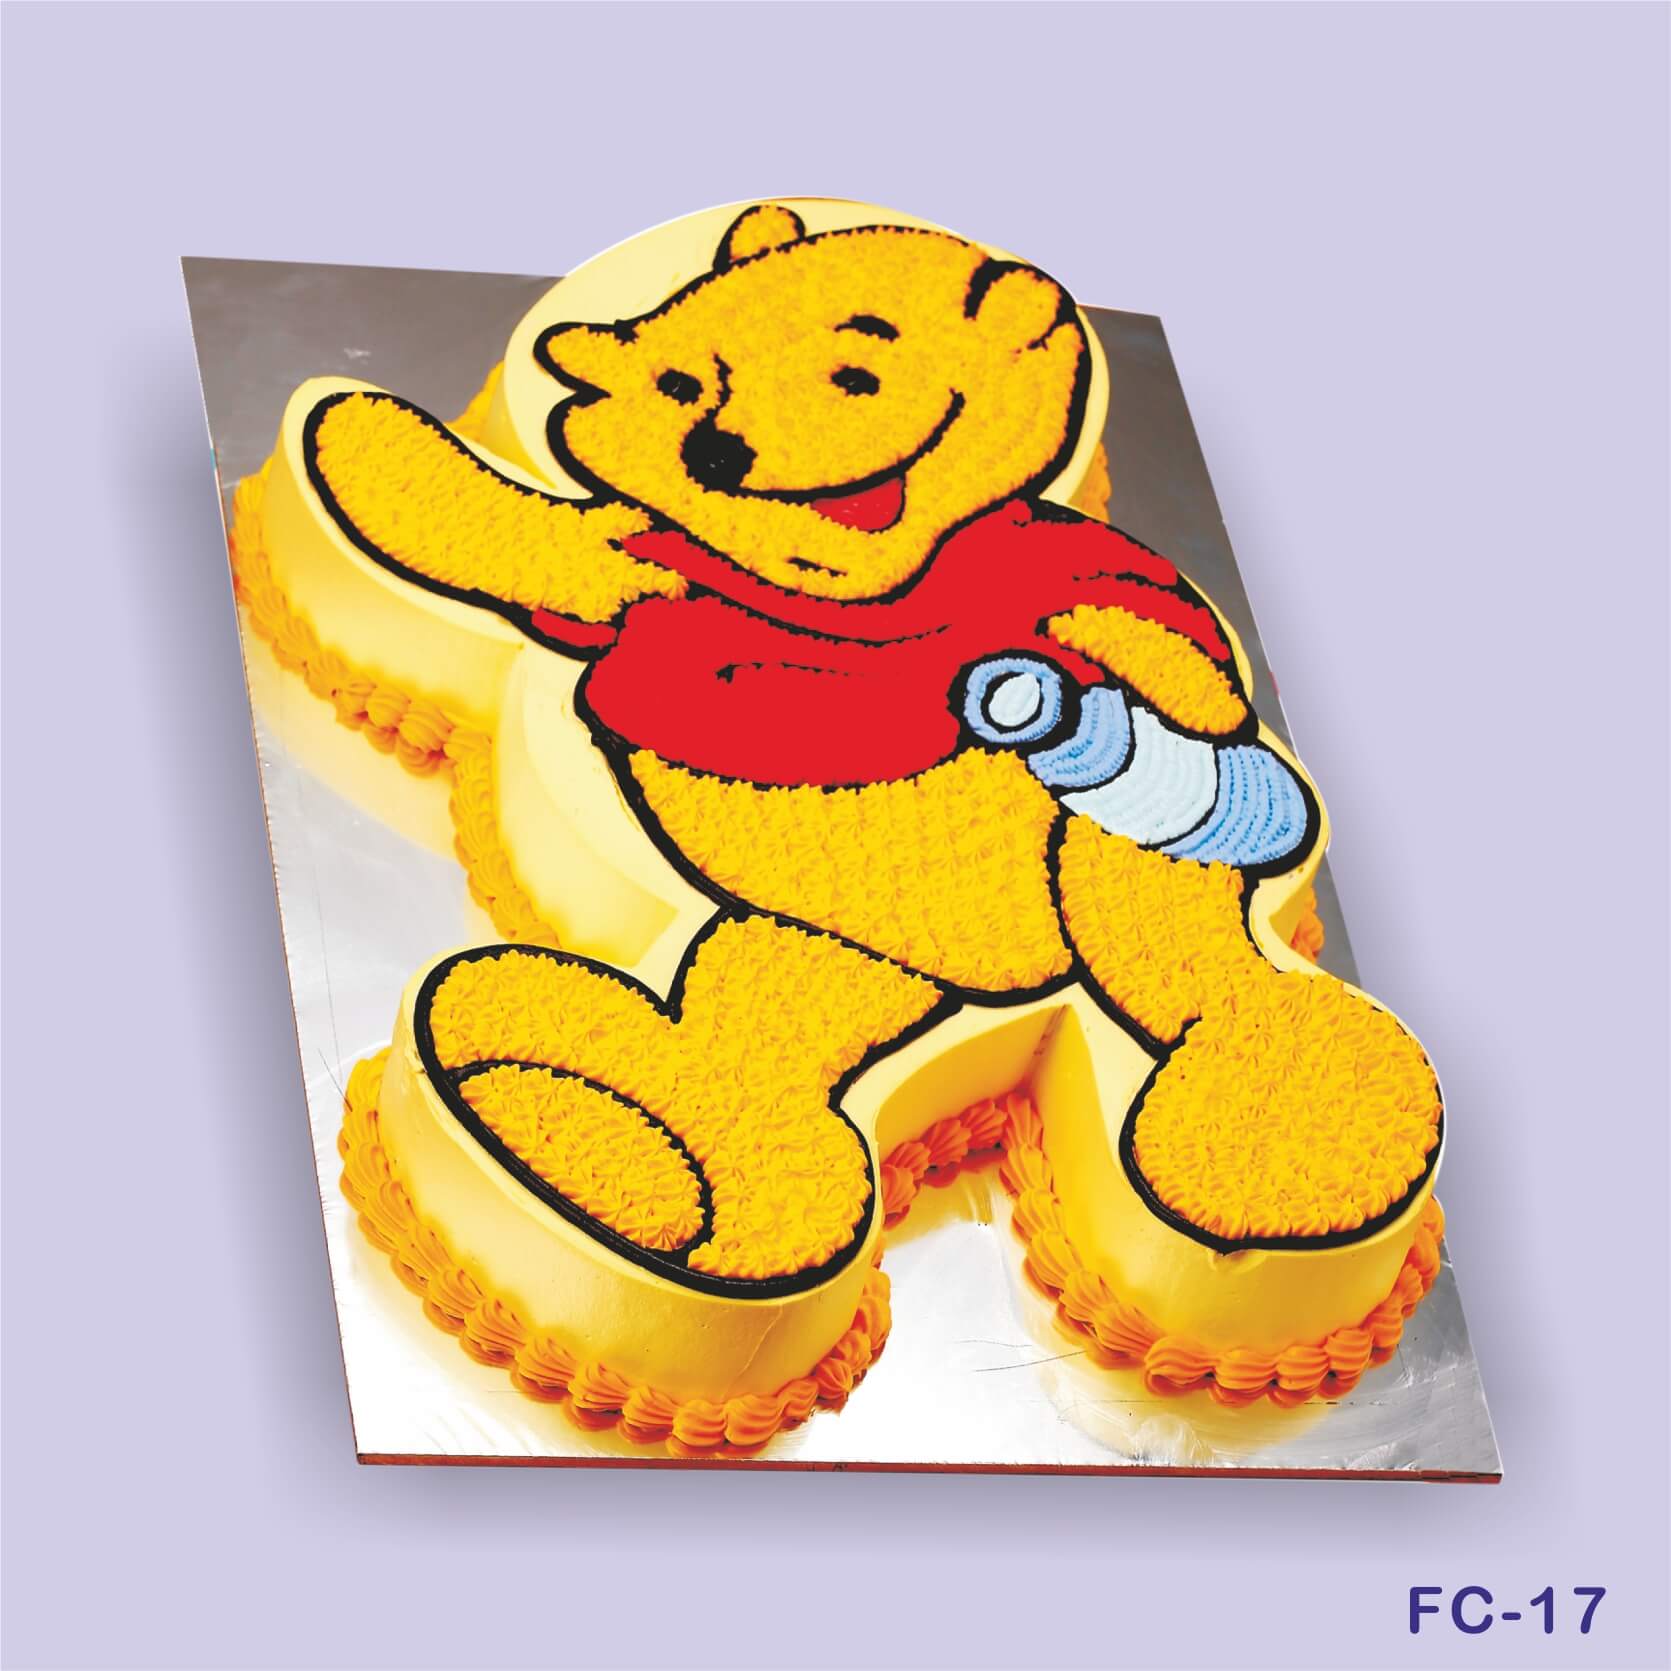 Winnie the Pooh Cake | Piazza's Bakery